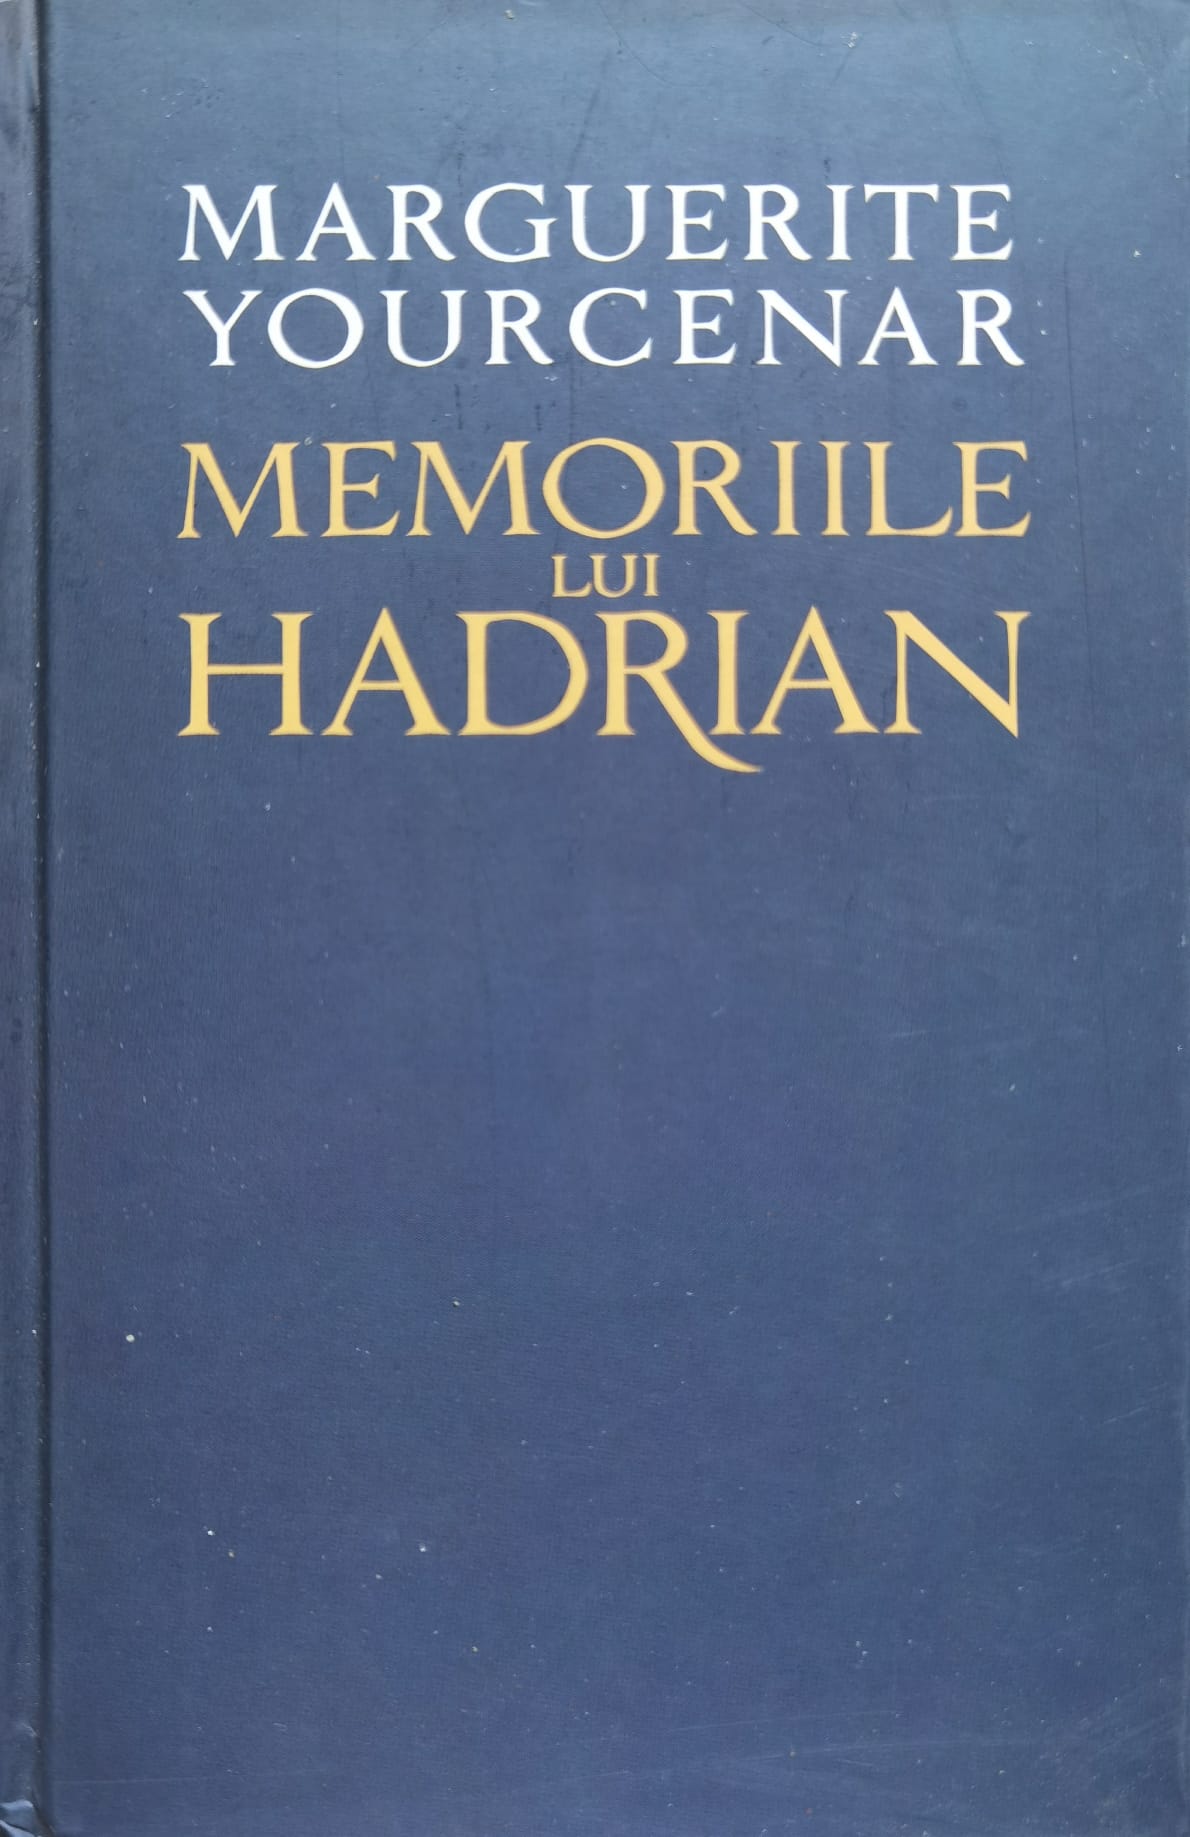 memoriile lui hadrian                                                                                marguerite yourcenar                                                                                